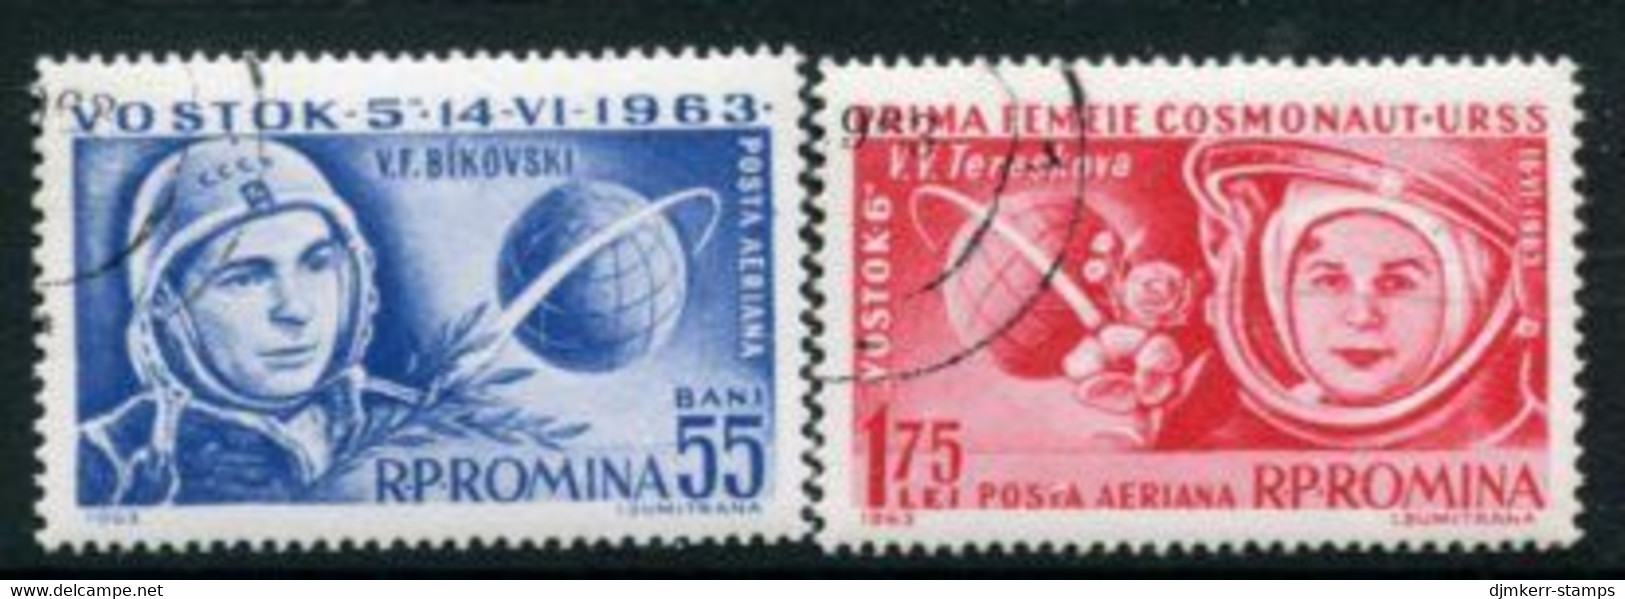 ROMANIA 1963 Vostok 5 And 6 Space Flights Used.  Michel 2171-72 - Gebraucht